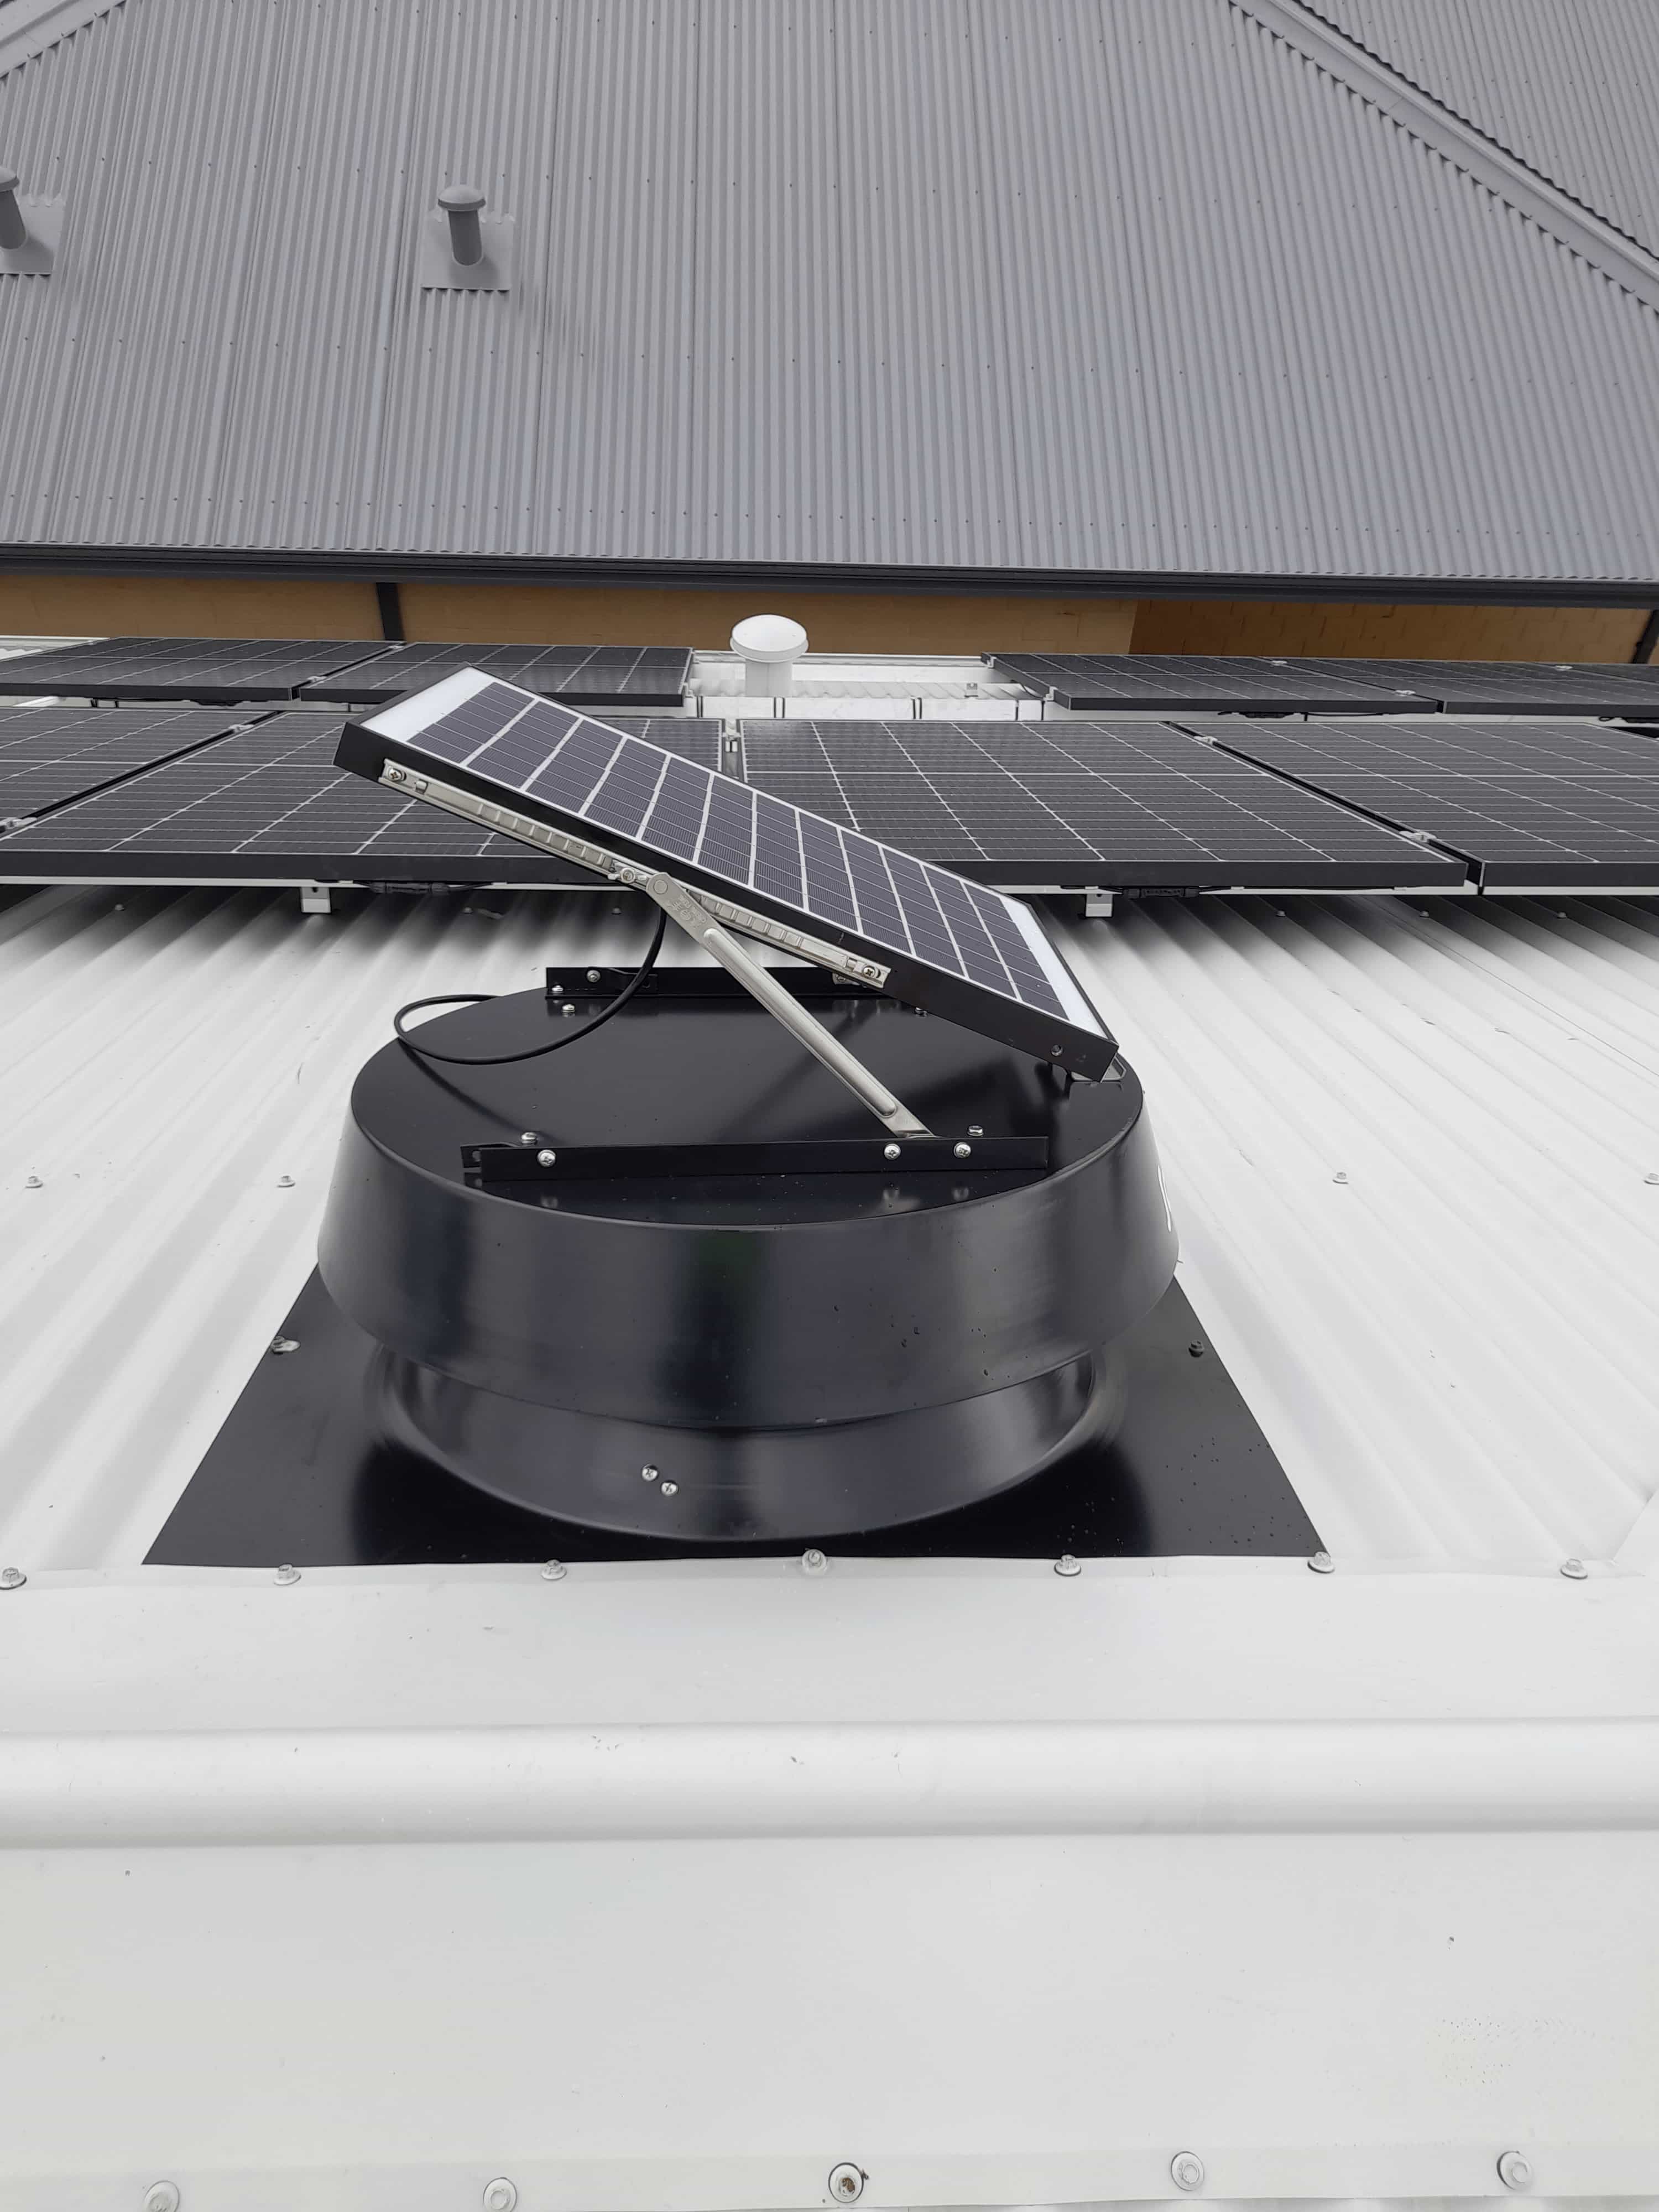 Solarark Solar Vent Installed on a tiled roof